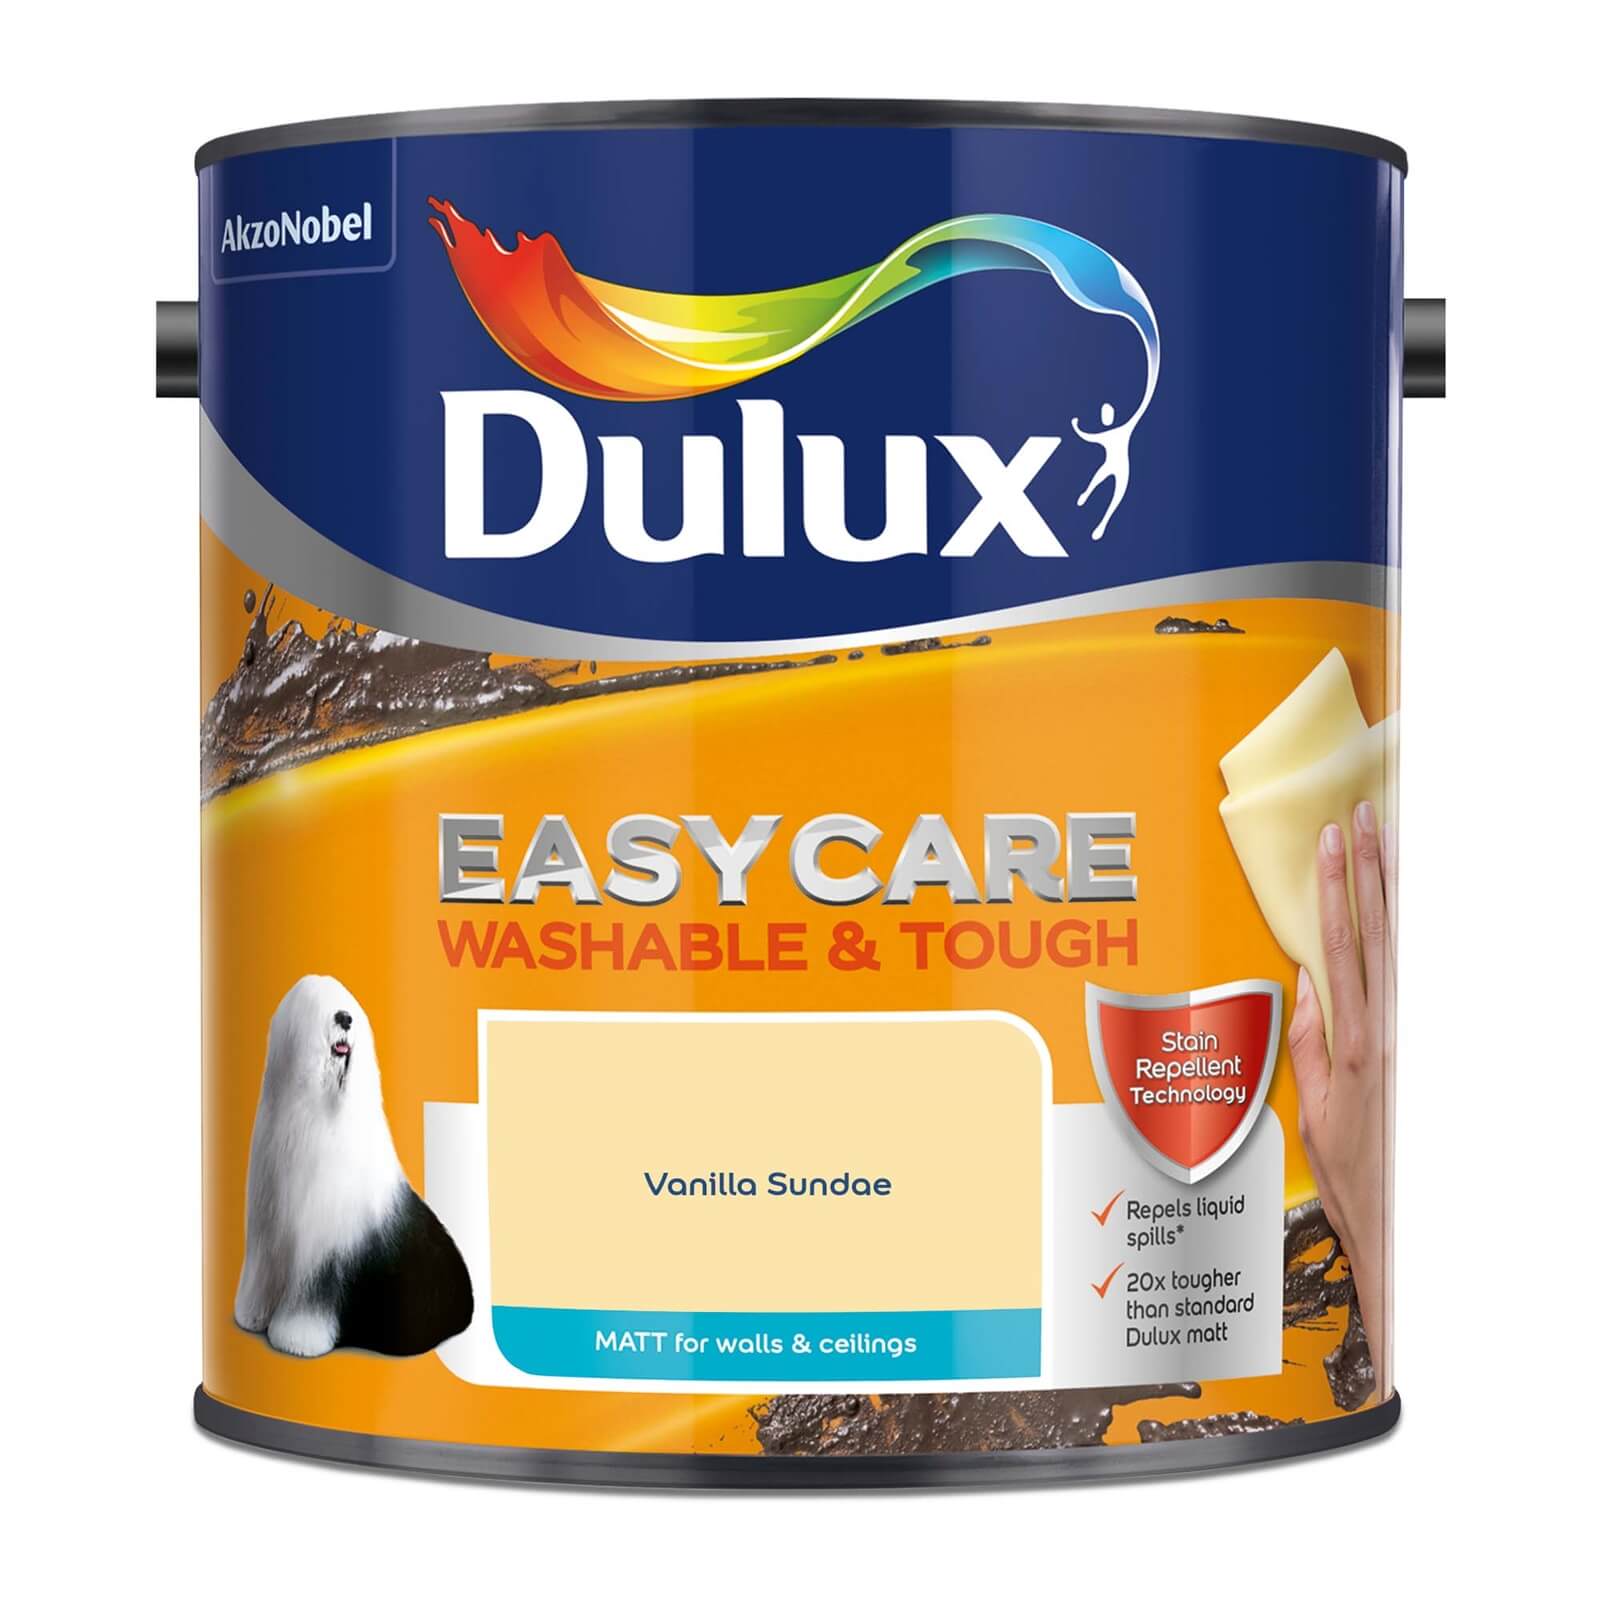 Dulux Easycare Washable & Tough Matt Paint Vanilla Sundae - 2.5L